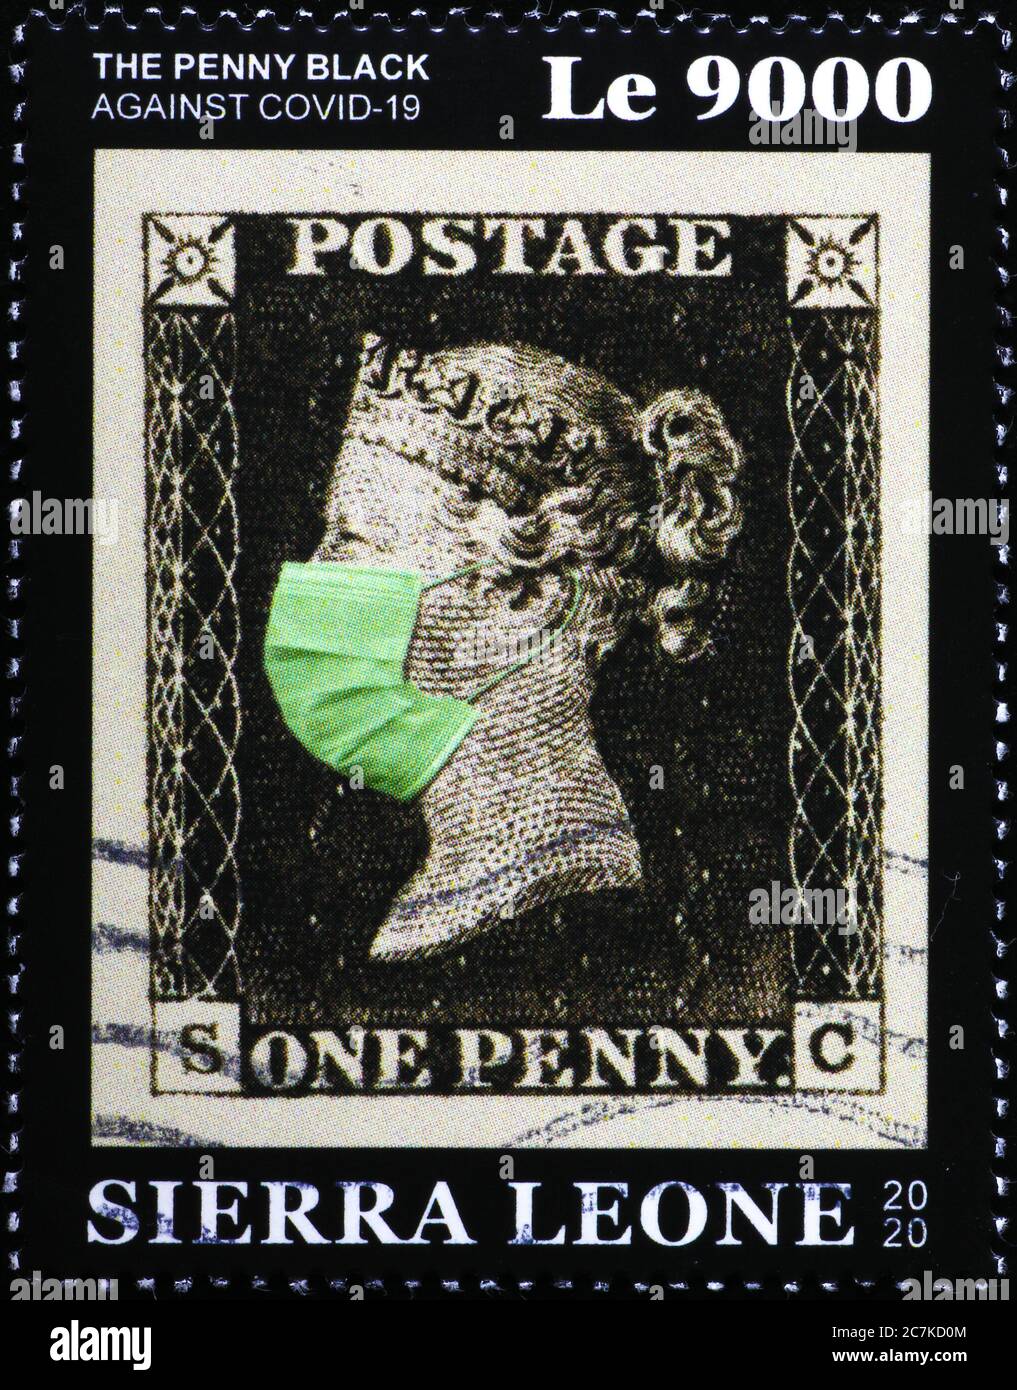 Ancien timbre-poste avec masque facial contre Covid-19 Banque D'Images